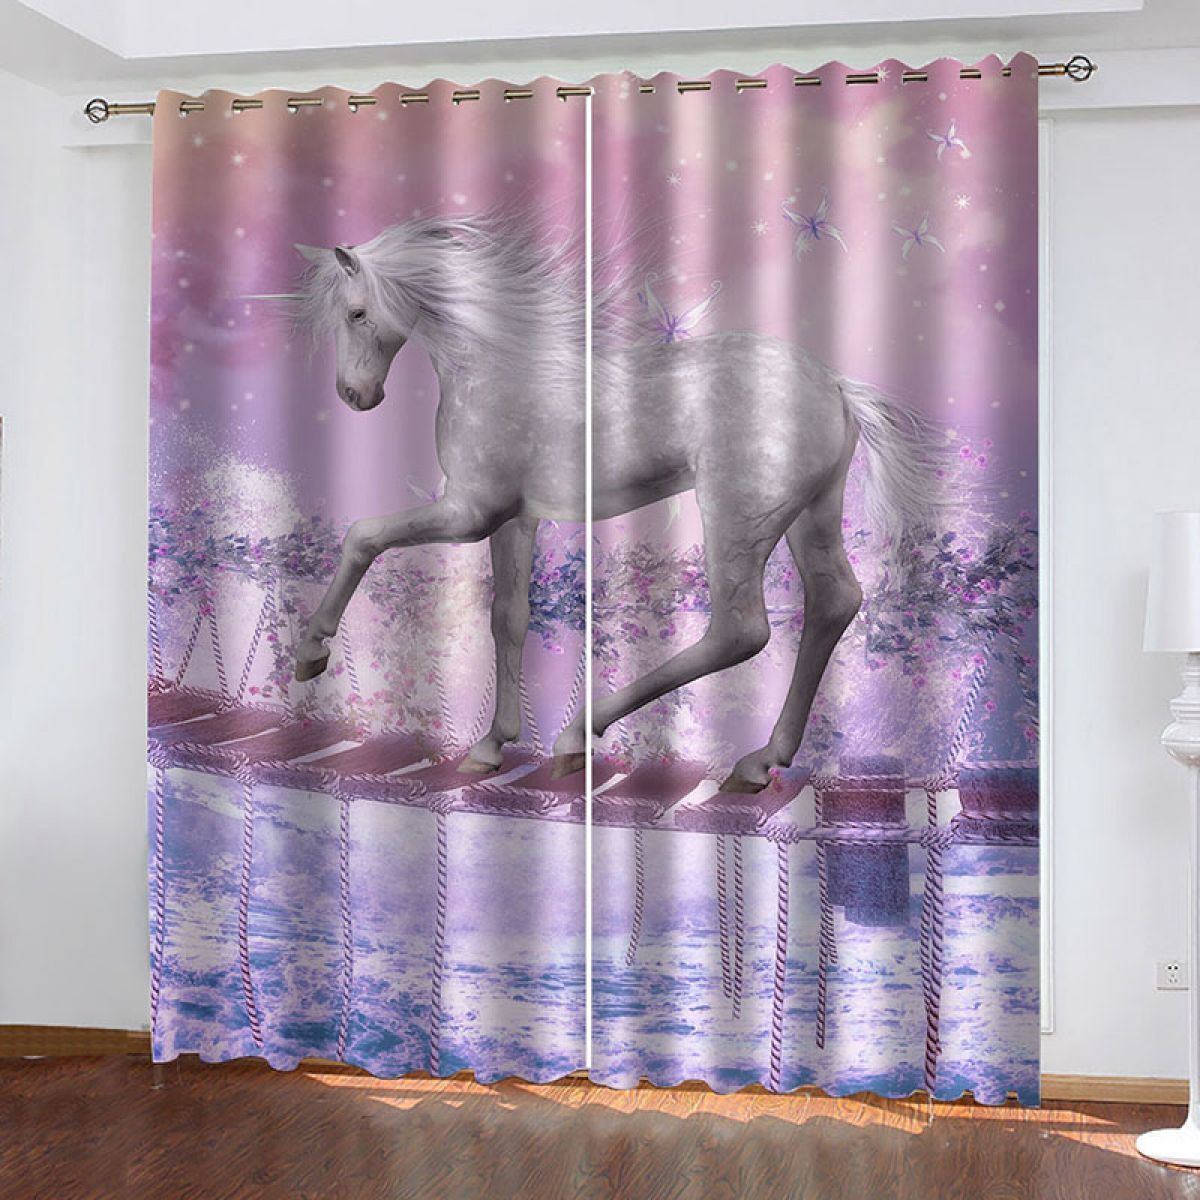 Lovely Horse Cross The Bridge Printed Window Curtain Home Decor